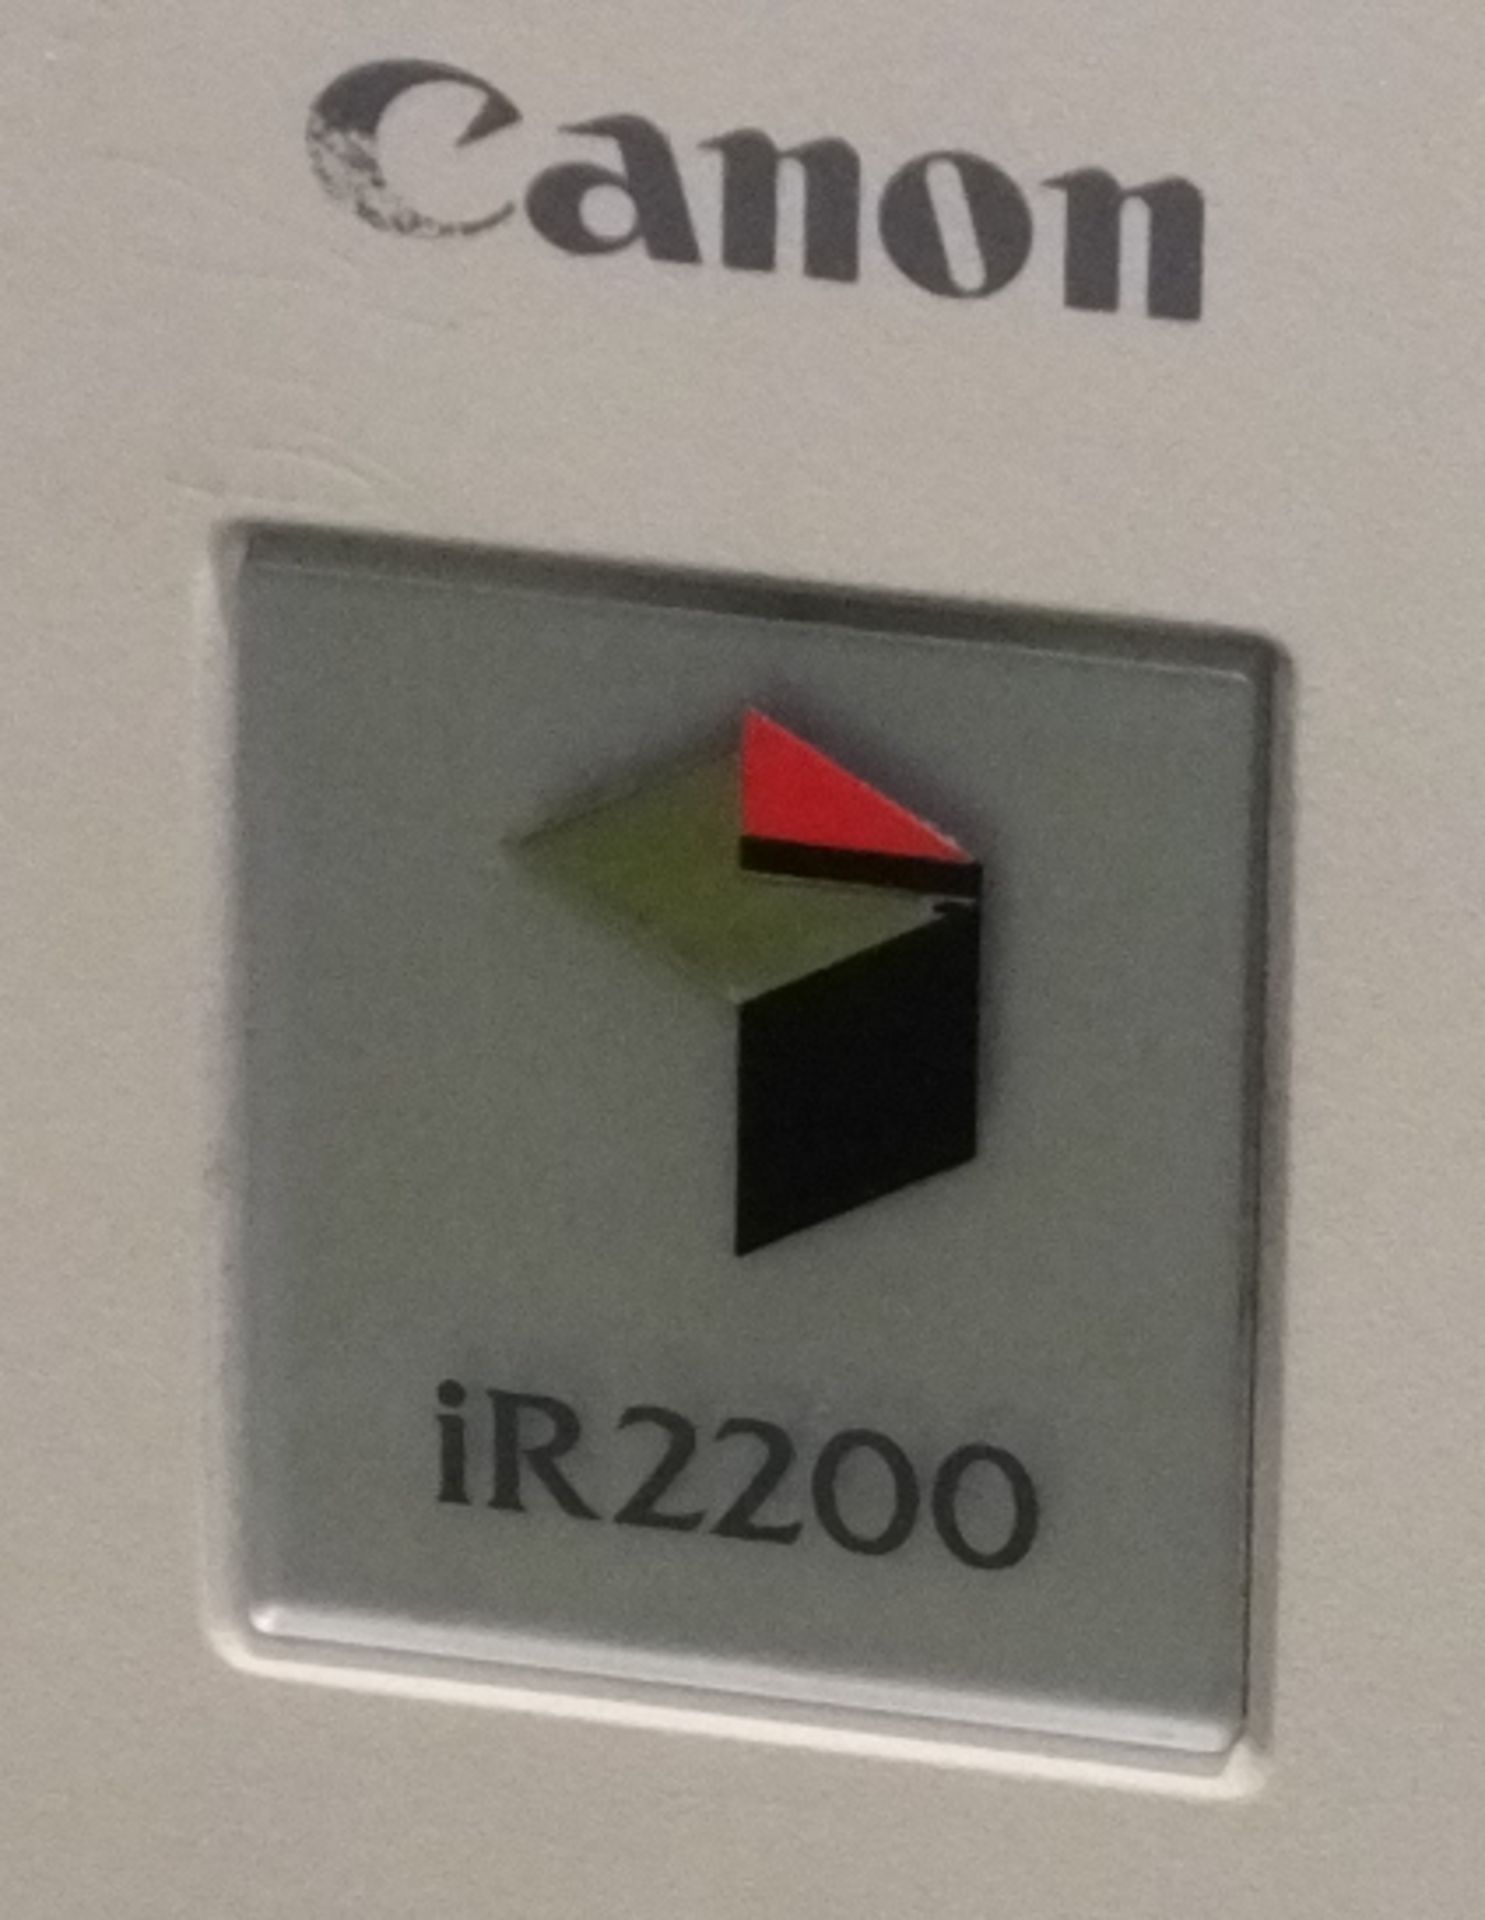 Canon IR2200 office printer - Image 2 of 4